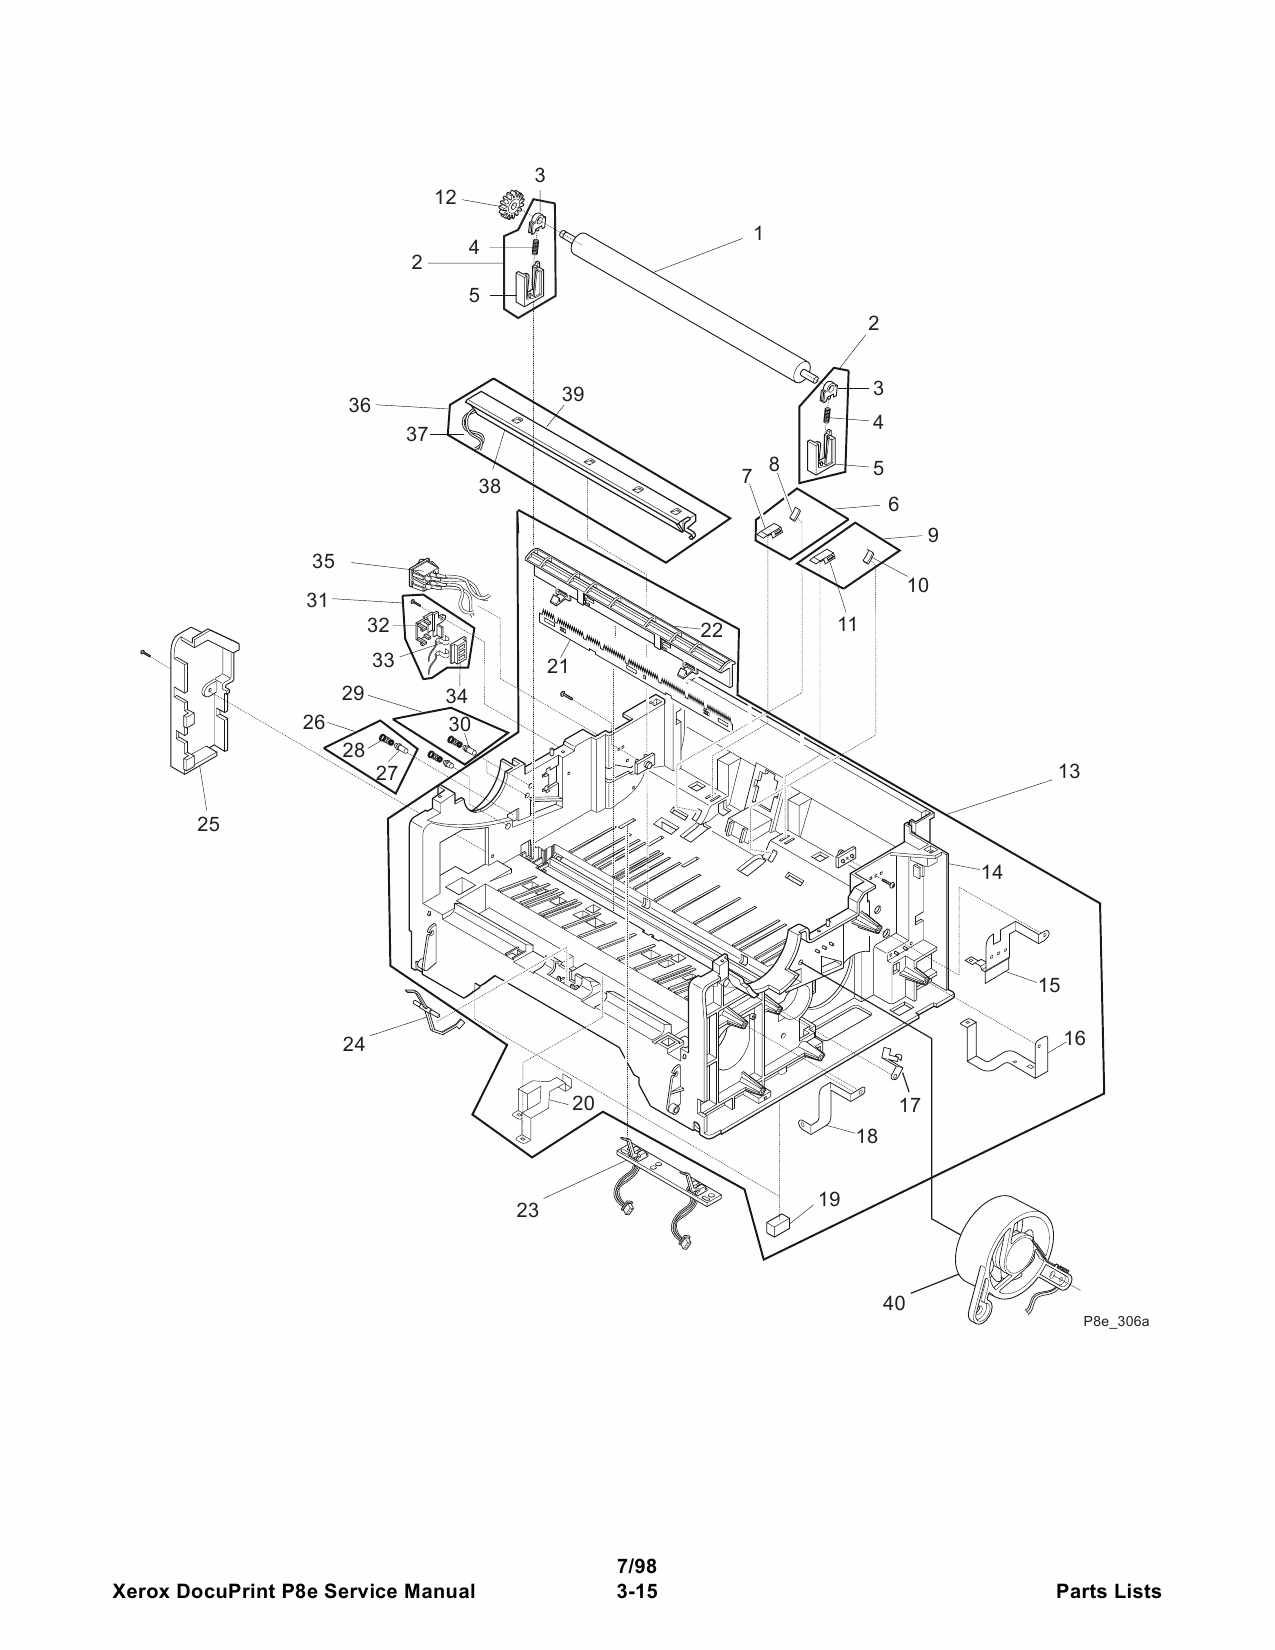 Xerox DocuPrint P8e P8ex Parts List and Service Manual-4